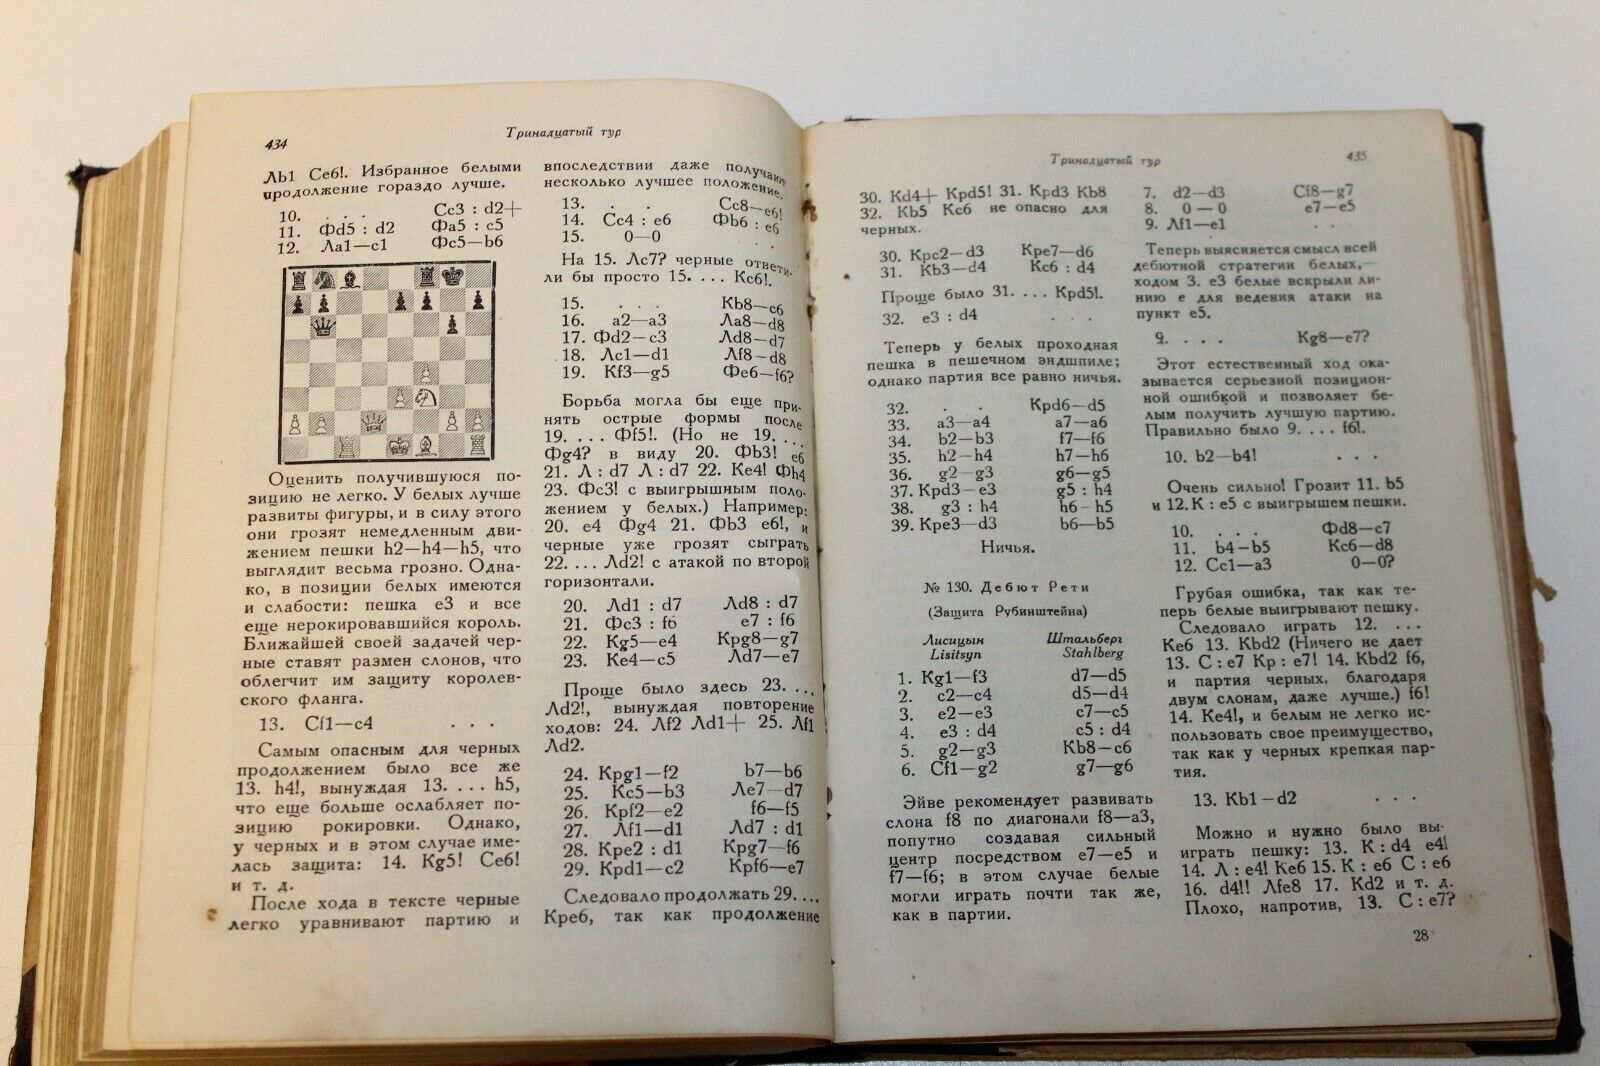 10853.Antique Russian Chess Book: 2d international chess tournament. Moscow 1935